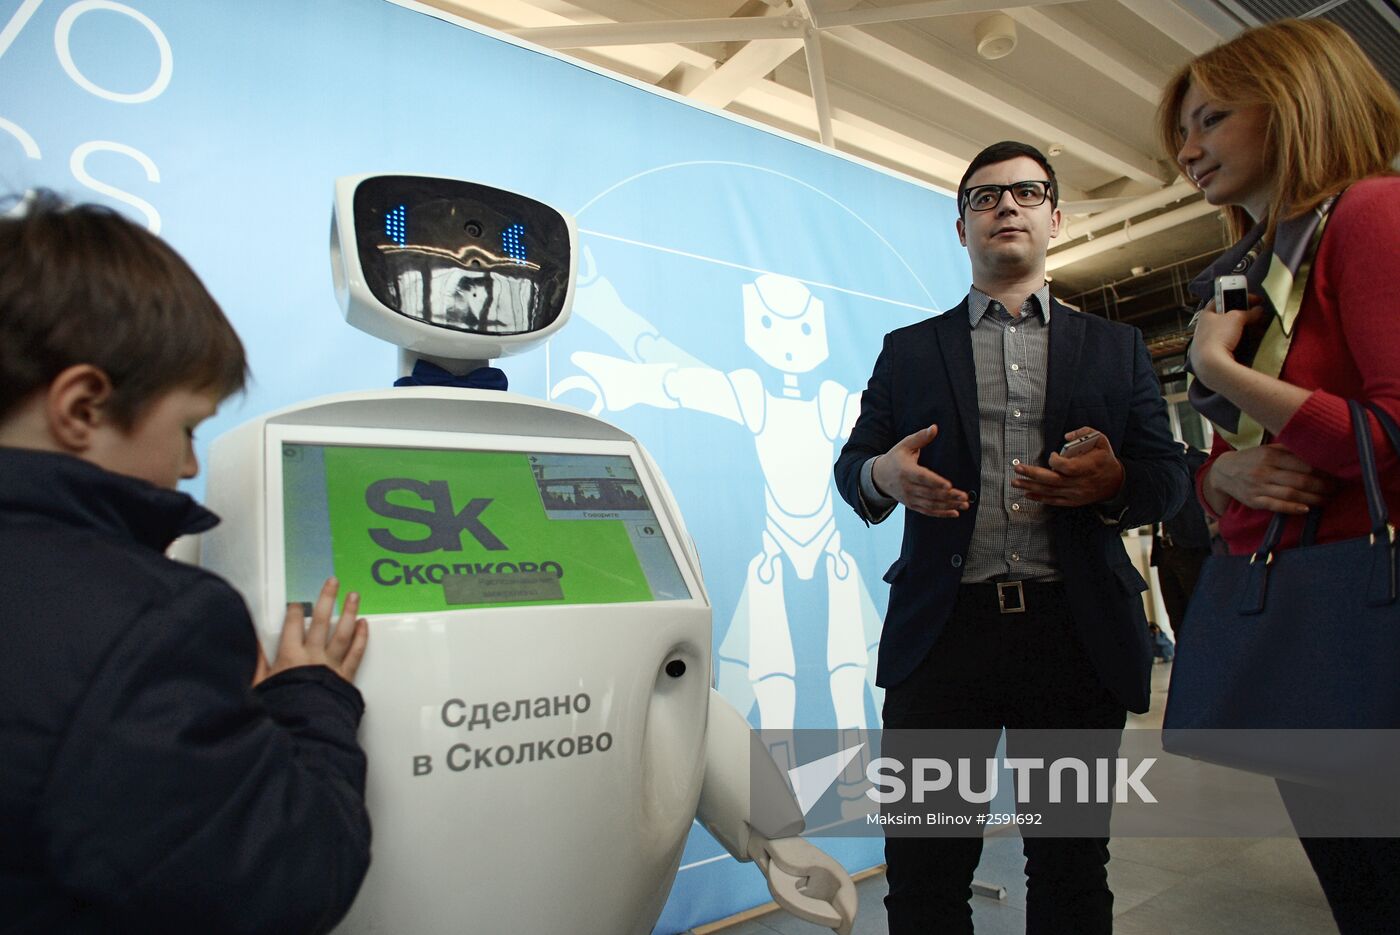 Skolkovo Robotics 2015 expo conference kicks off